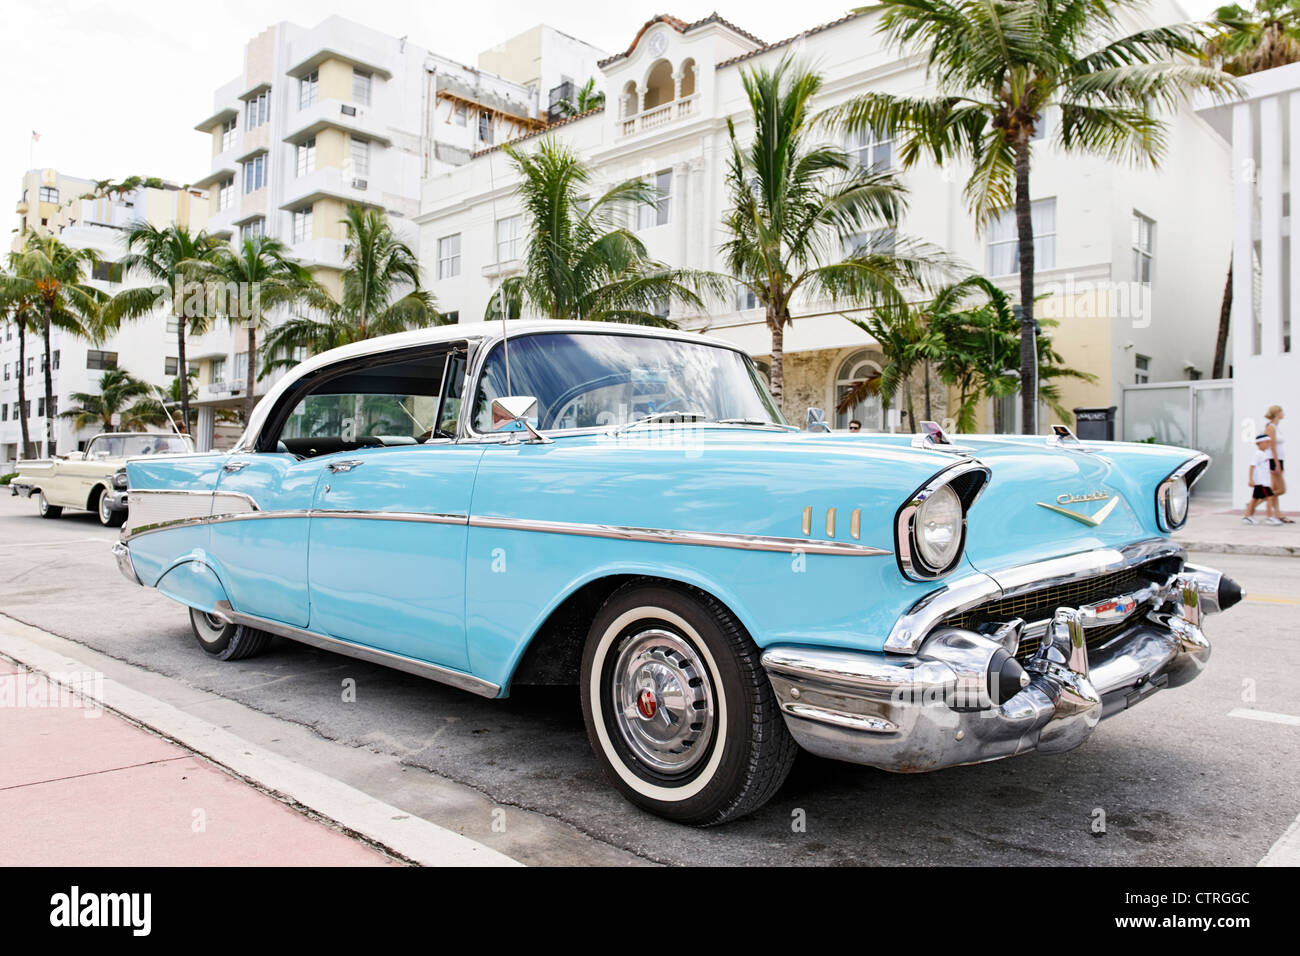 Chevrolet BEL AIR, built in 1957, fifties, American classic cars, OCEAN DRIVE, Miami South Beach Art Deco district, Florida, USA Stock Photo